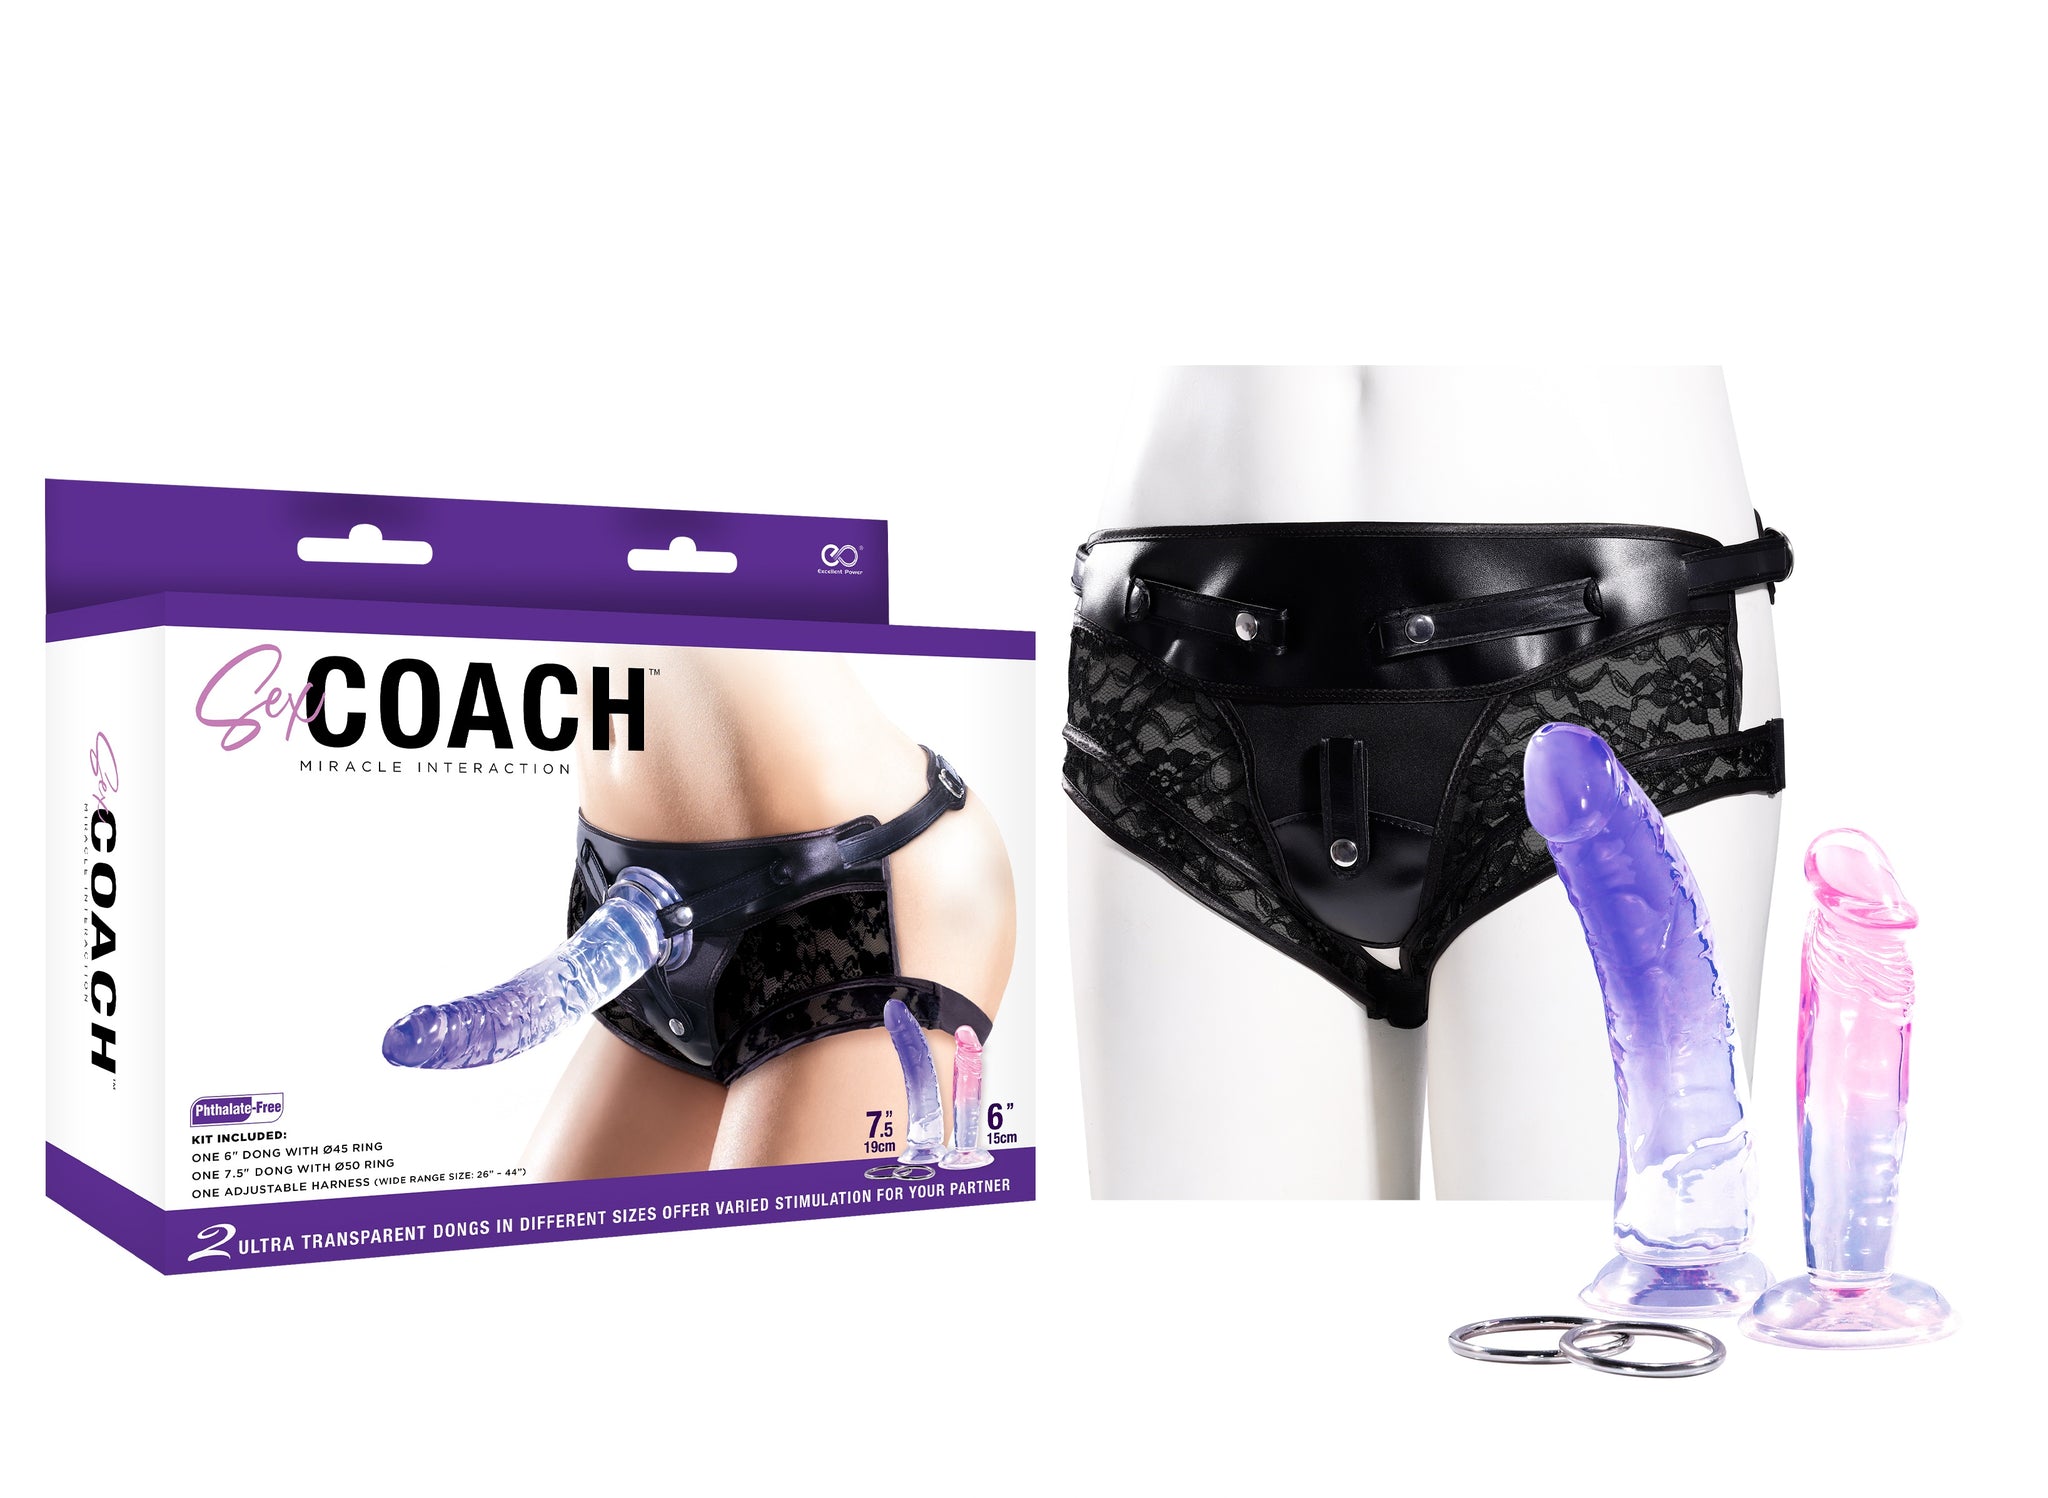 Sex Coach